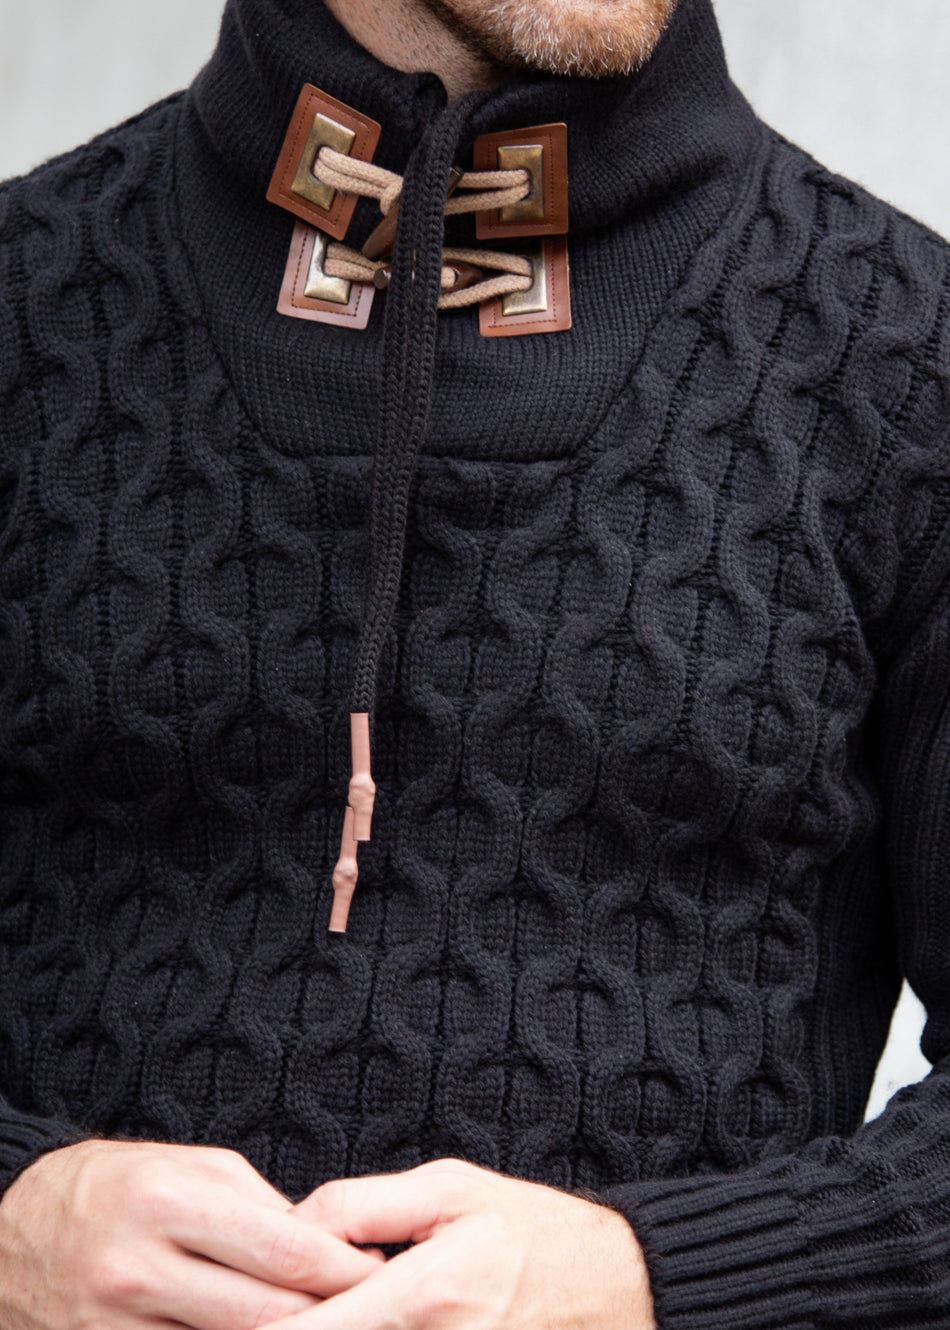   Essentials Men's V-Neck Cable Sweater, Black, X